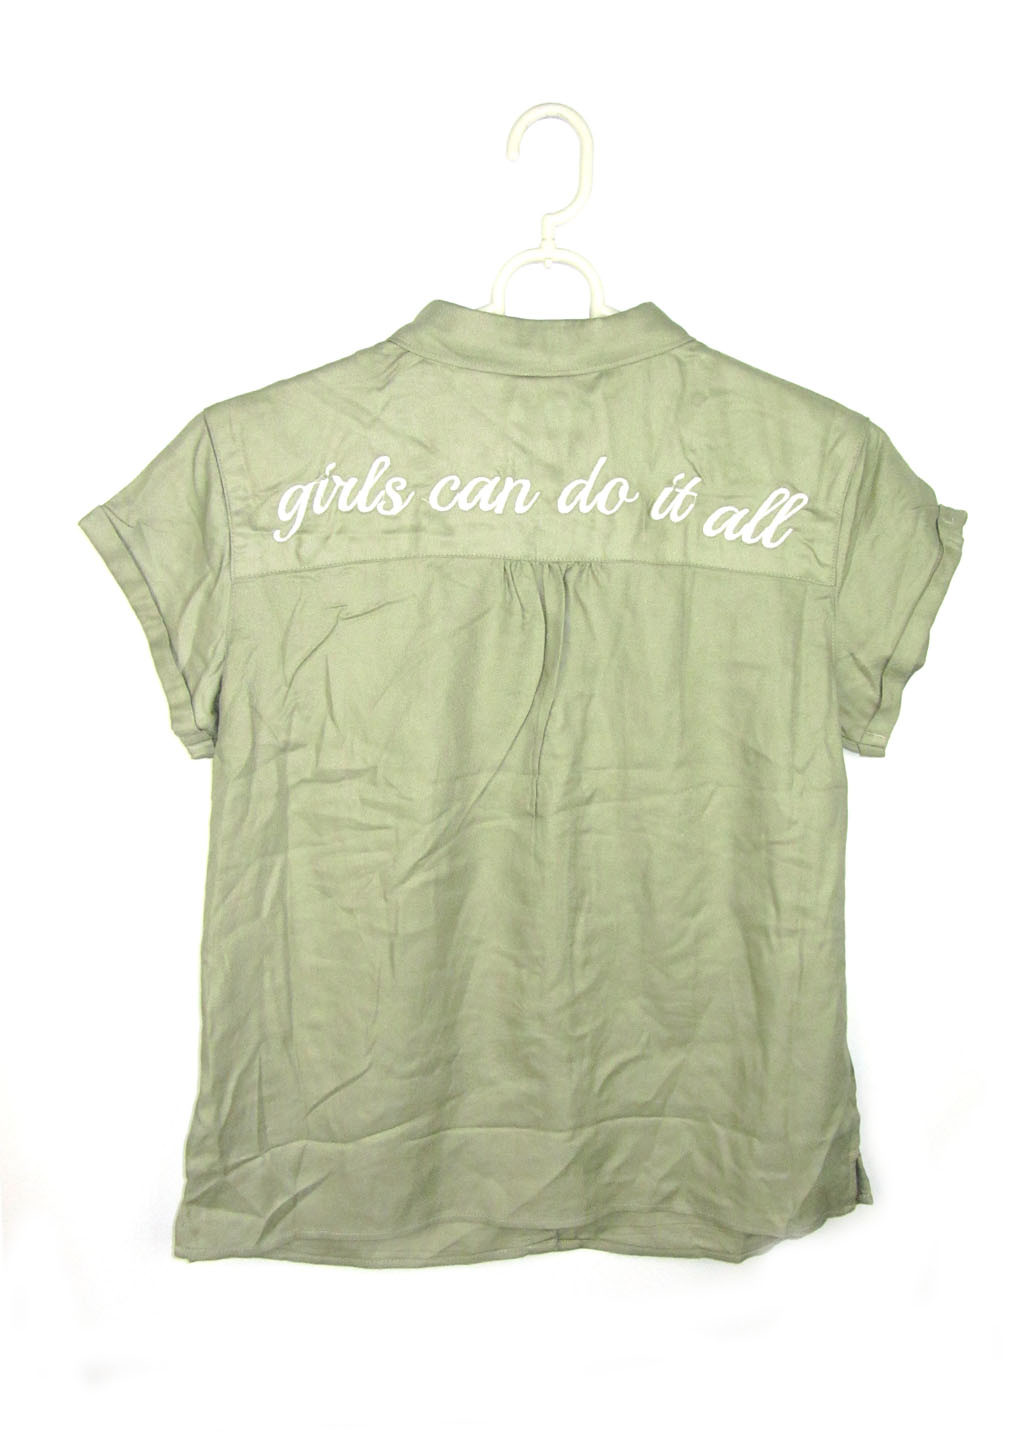 Оливковая (хаки) блузка с коротким рукавом H&M летняя